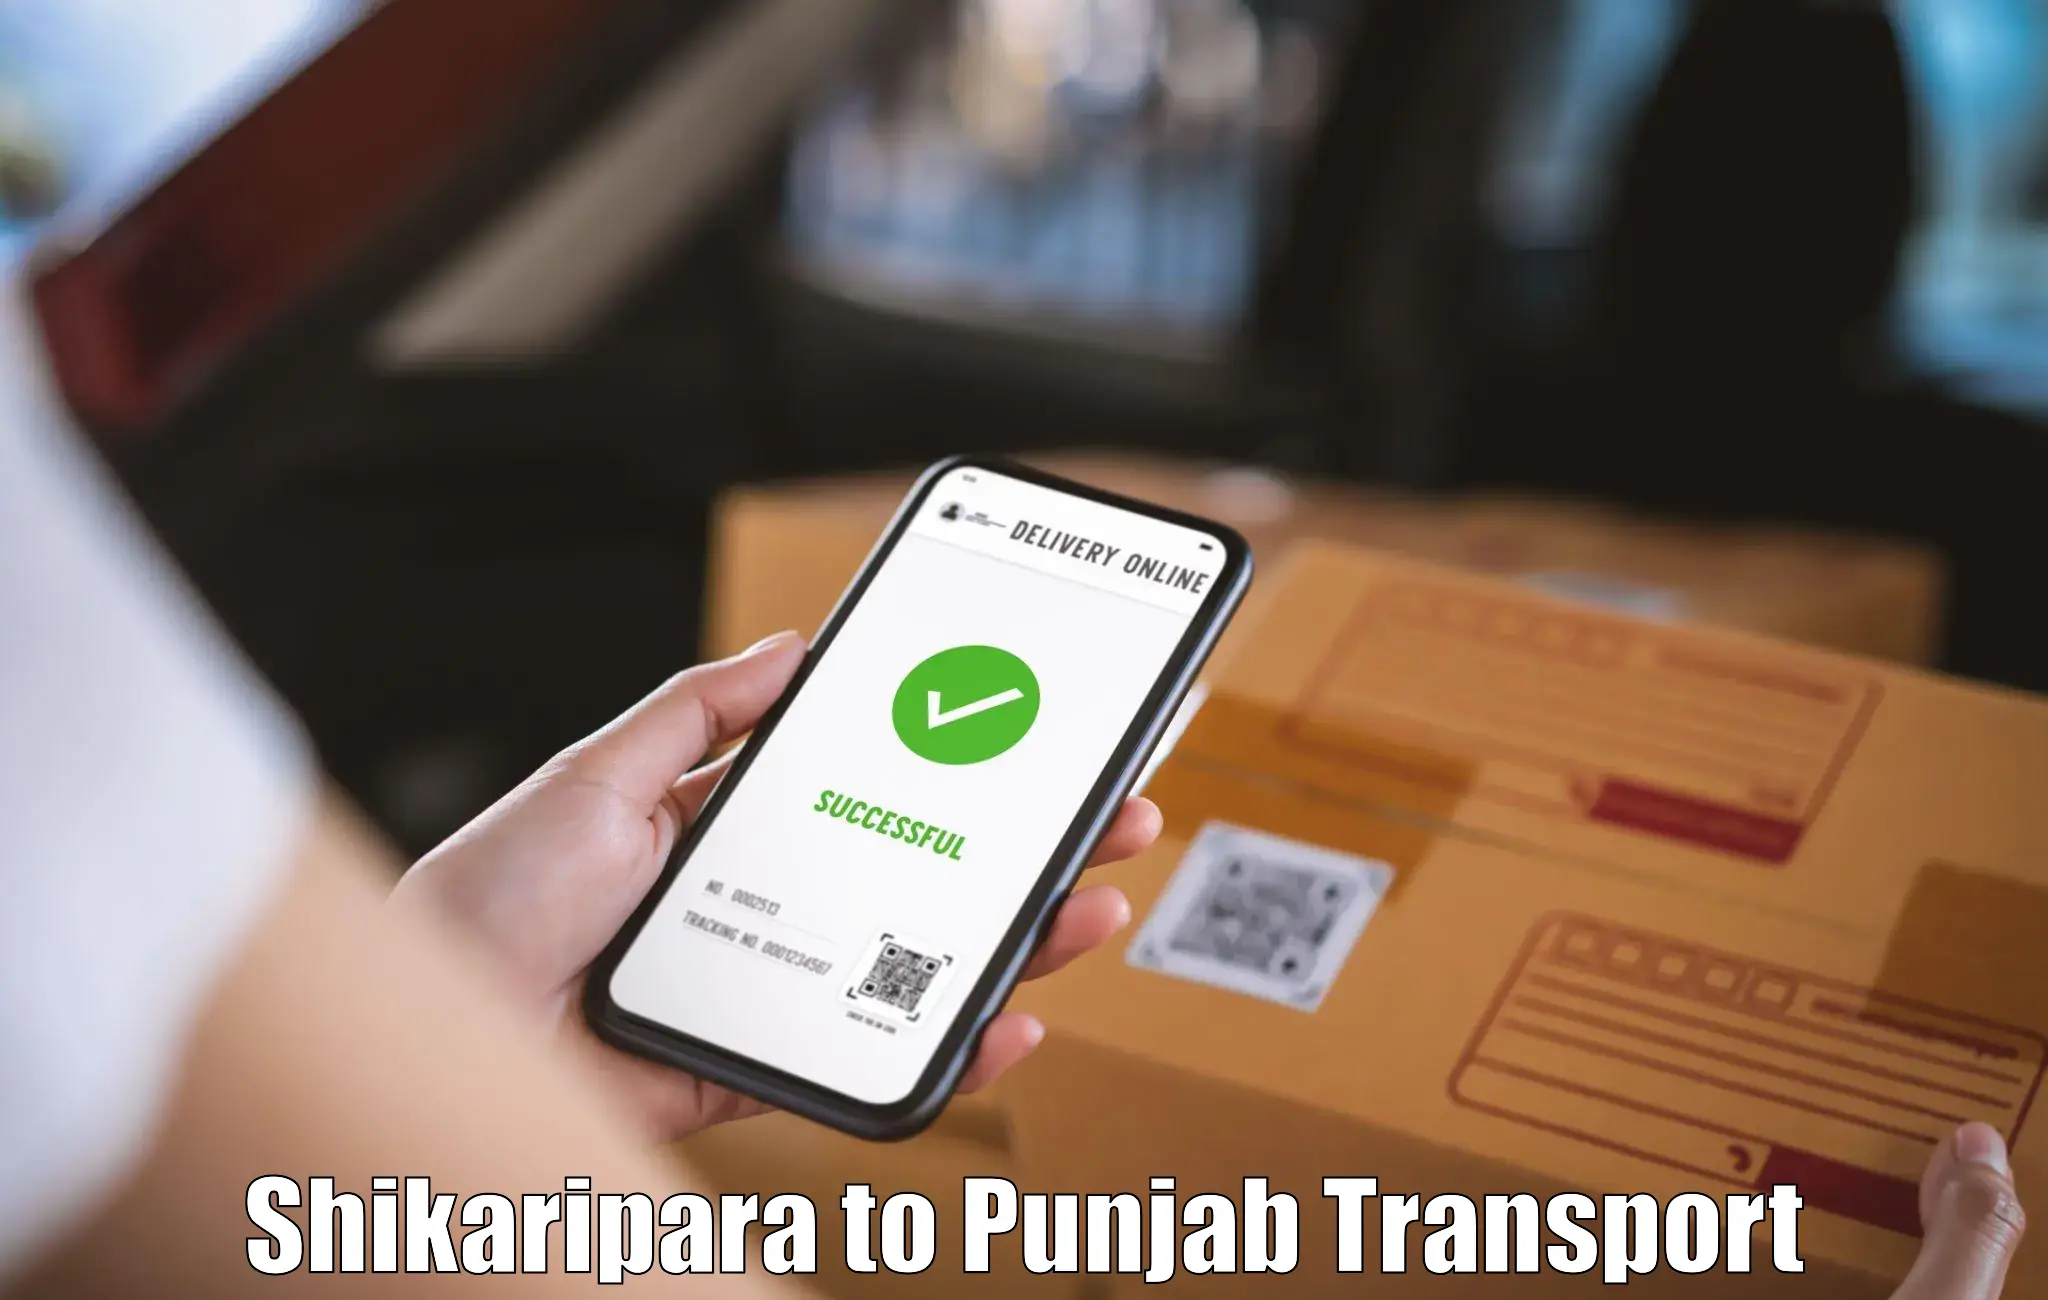 Transportation services Shikaripara to Sultanpur Lodhi